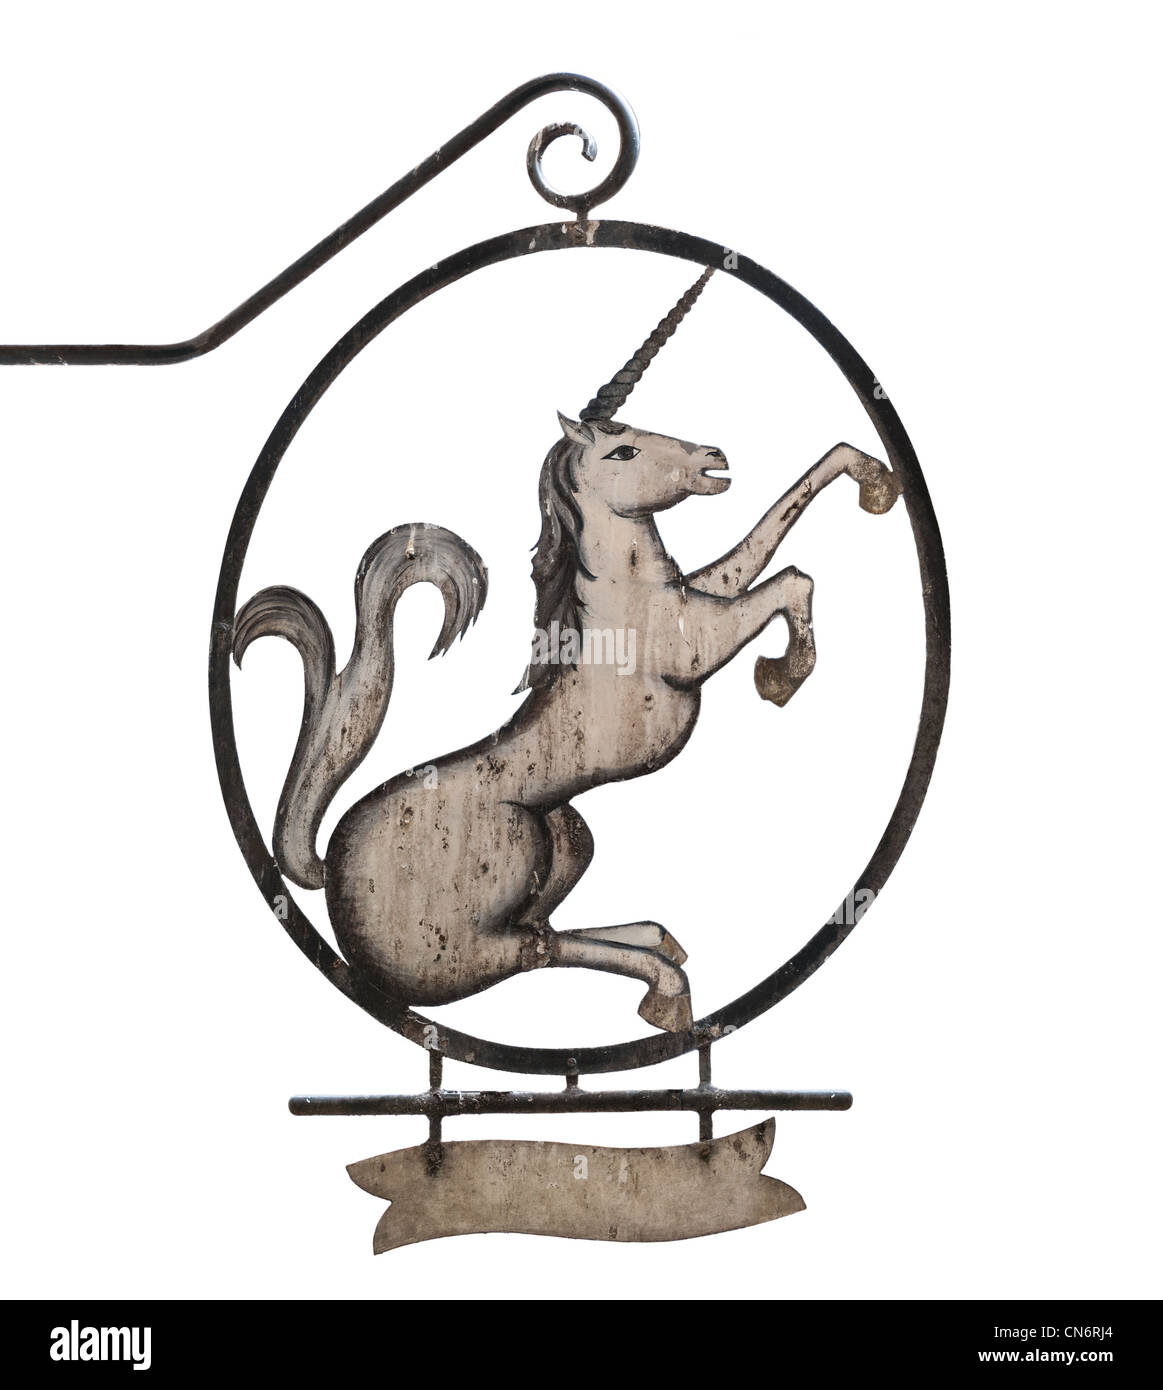 Antiguo signo de taberna medieval, pub, bar o tienda representando unicornio. Aislado sobre fondo blanco, lugar de texto bajo el unicornio. Foto de stock